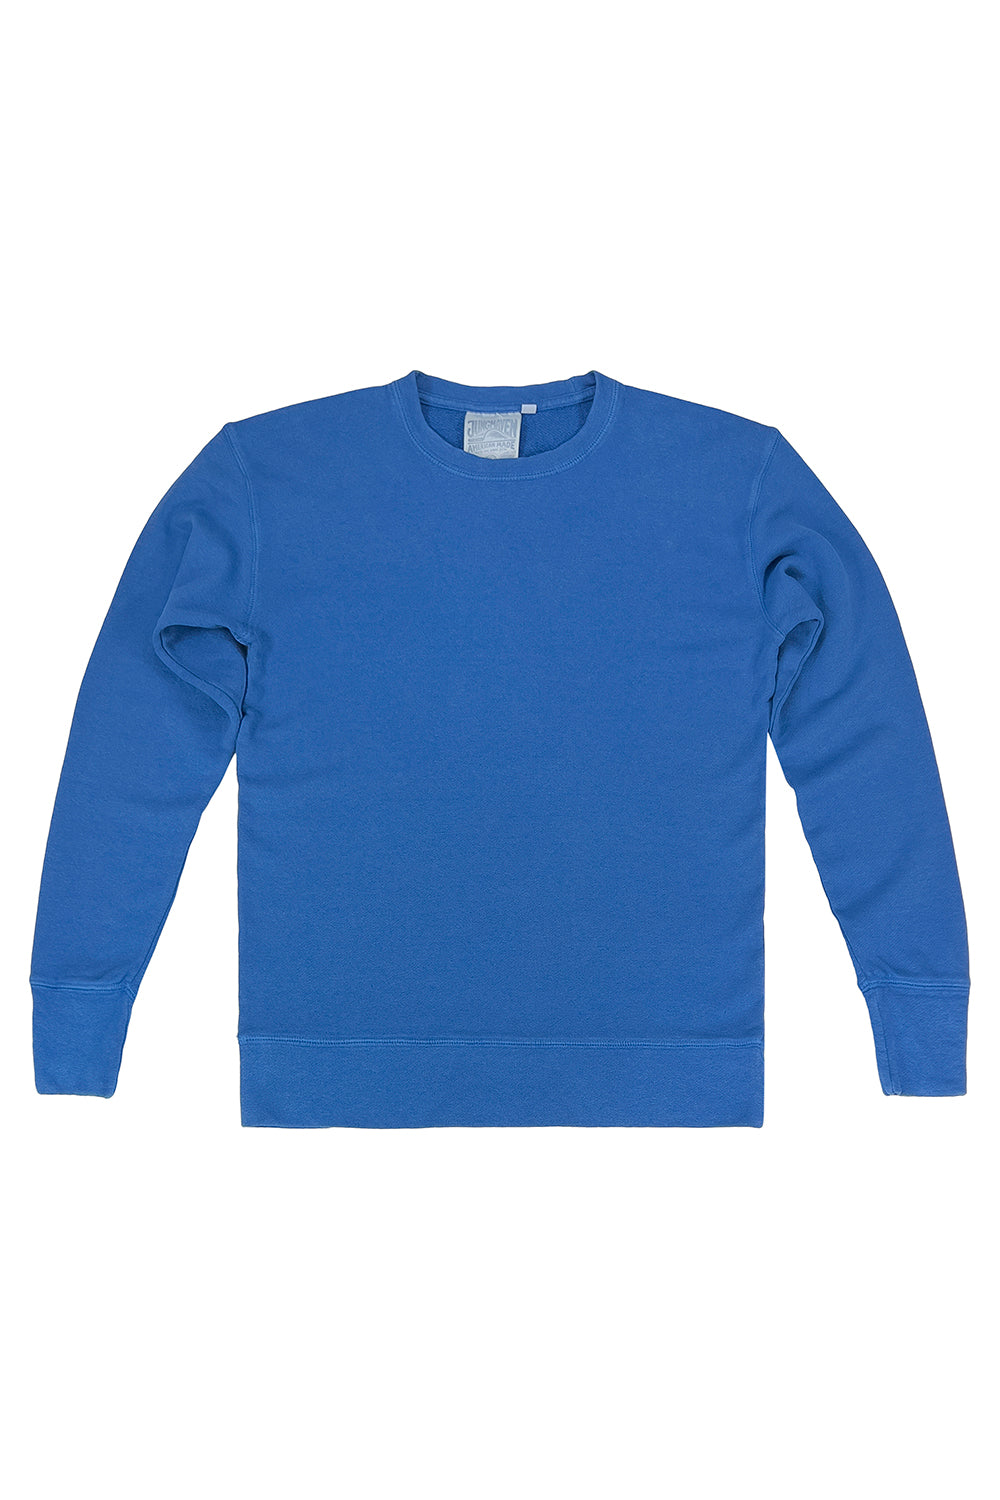 Tahoe Sweatshirt | Jungmaven Hemp Clothing & Accessories / Color: Galaxy Blue